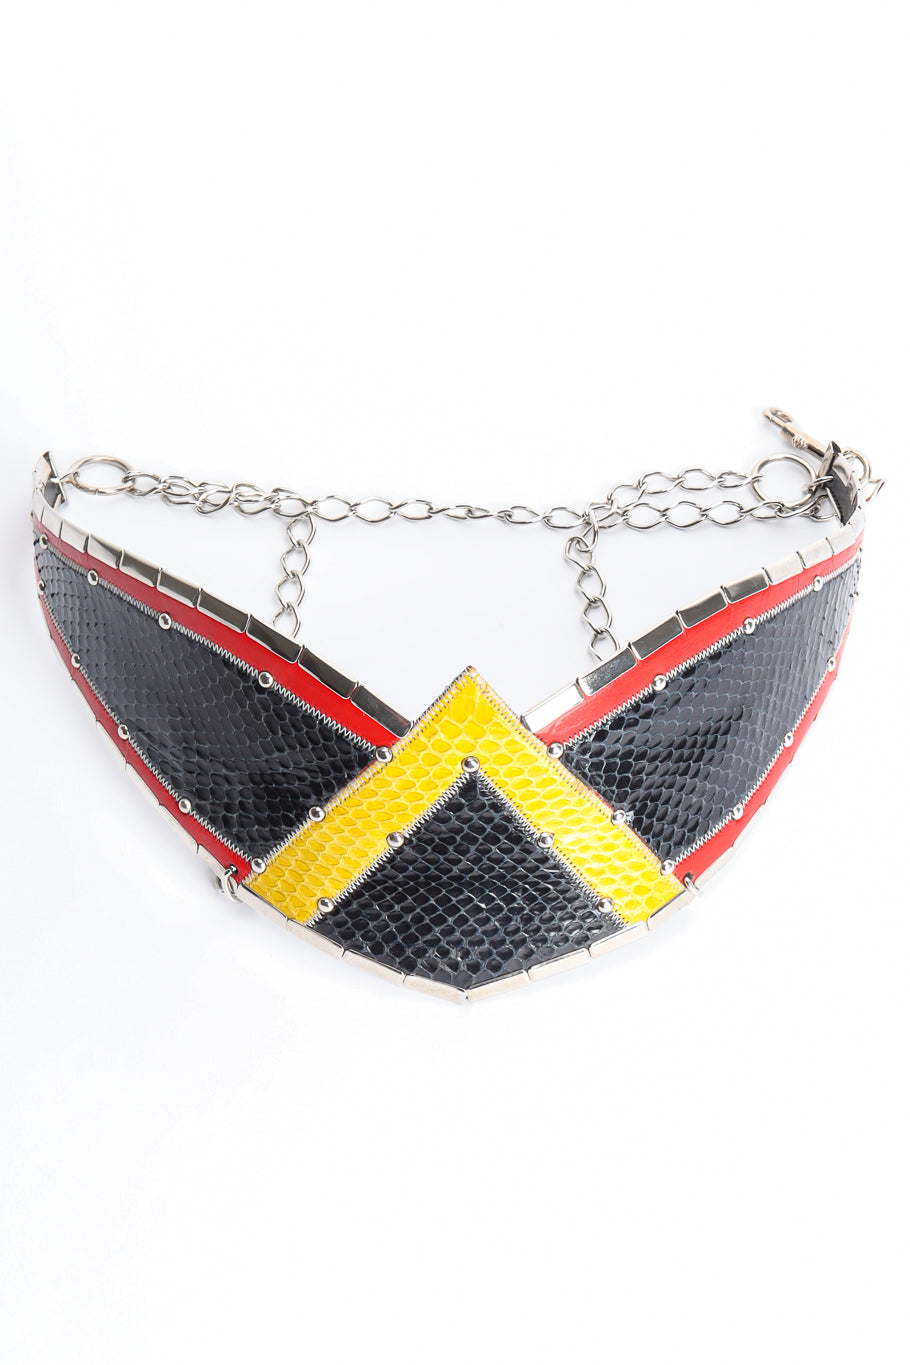 Geometric wing reptile leather belt Spira fastened @recessla